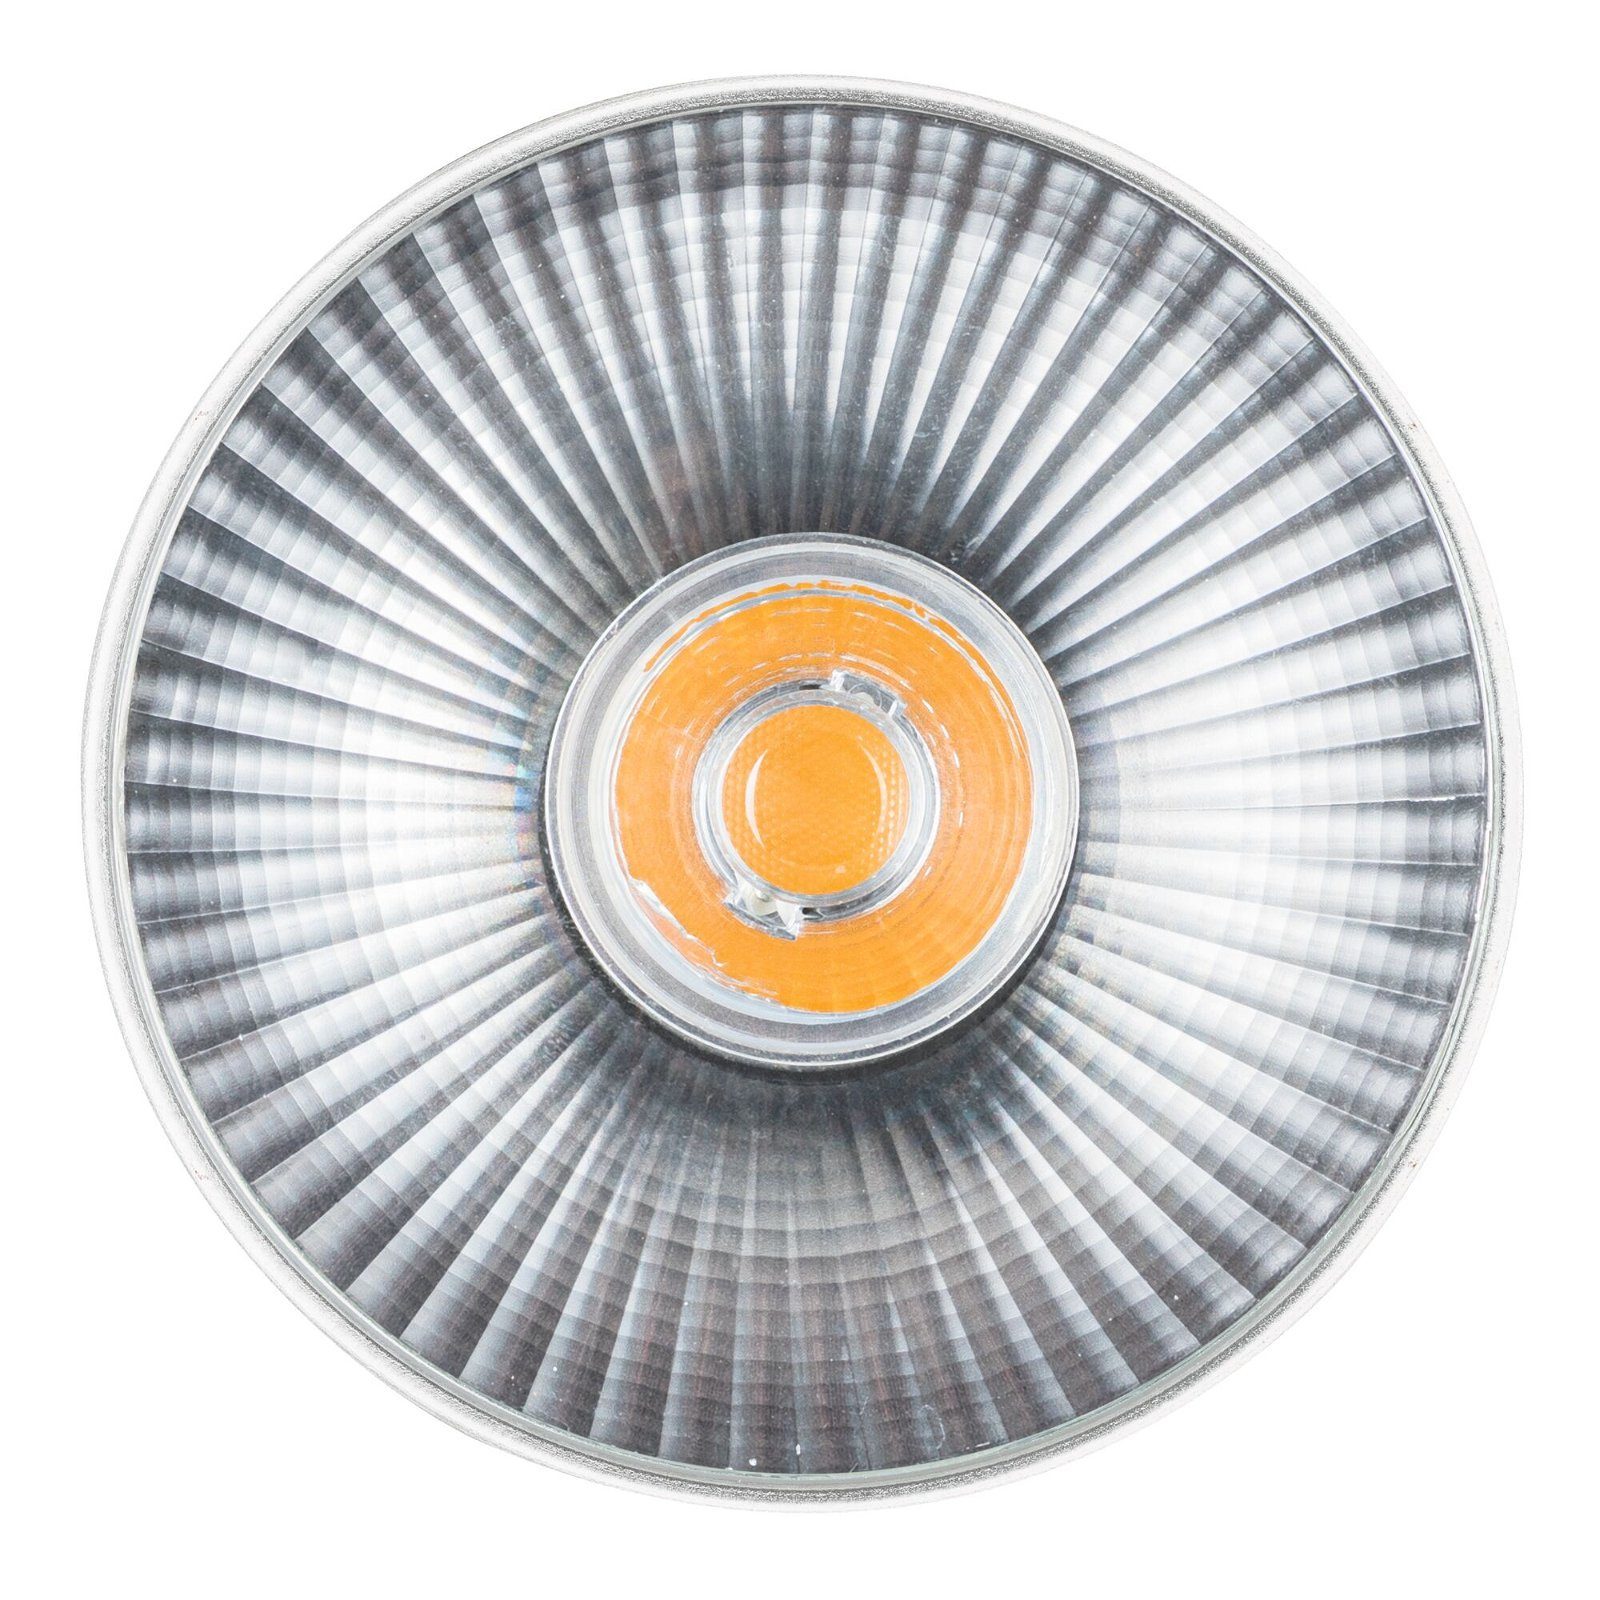 Paulmann LED-Leuchtmittel QPAR111 4W 2700K 230V 1 Warmweiß 24°, St